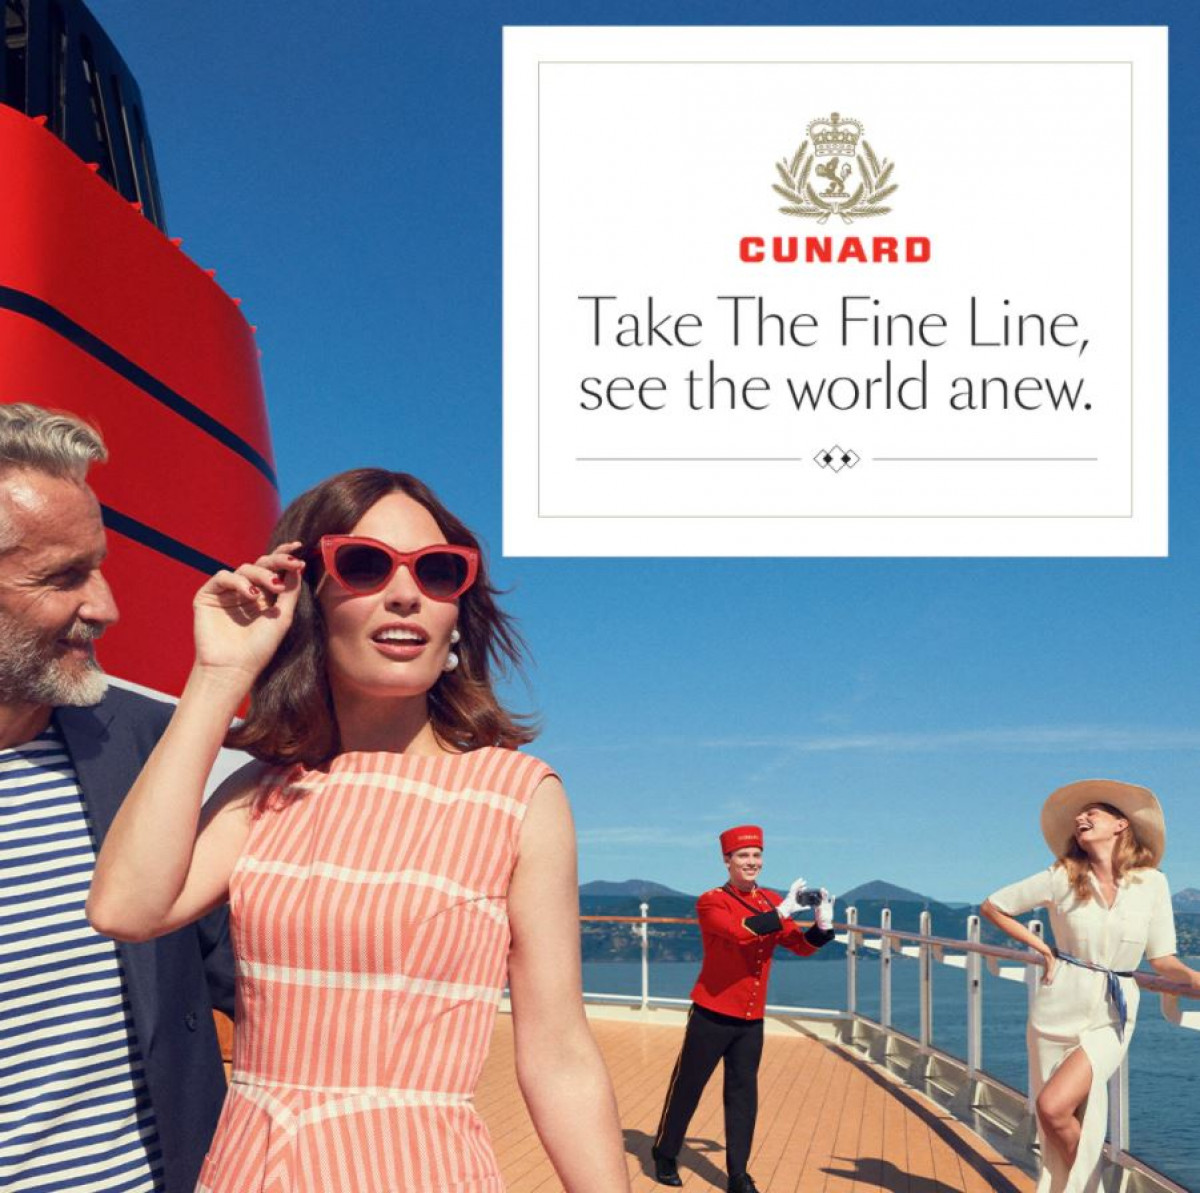 Cunard Over the Line Cruise Sale